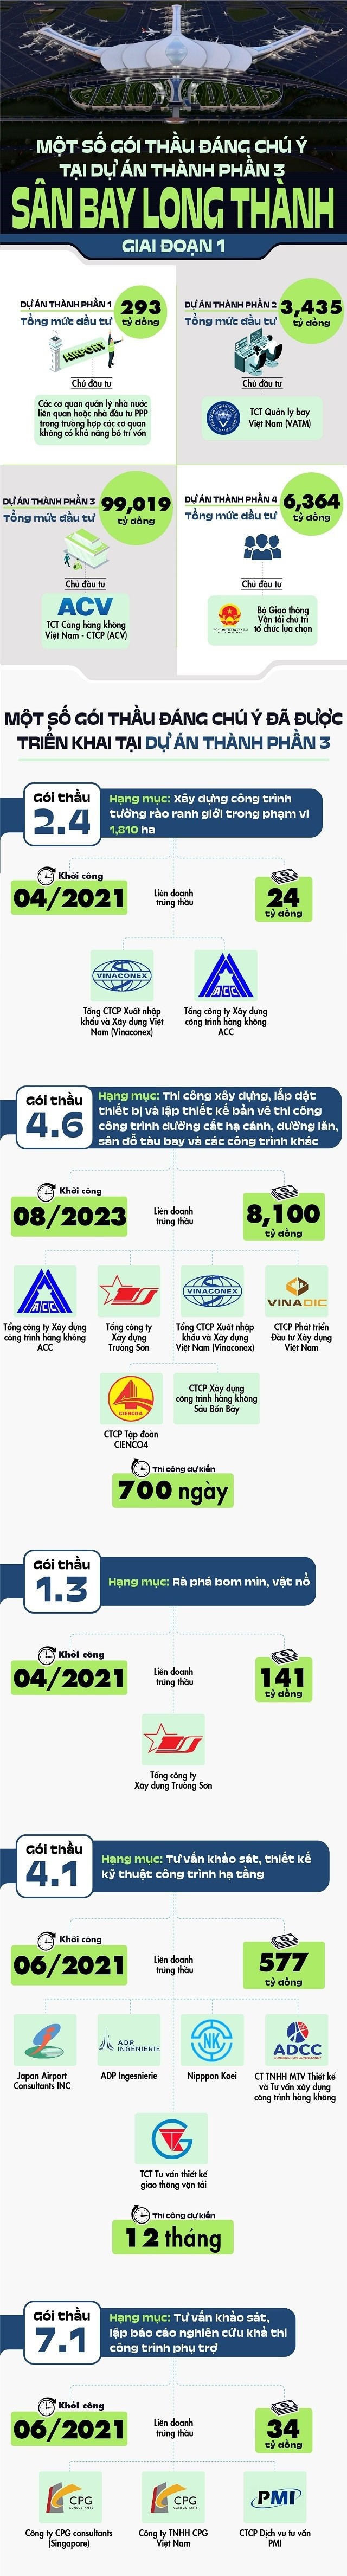 [Infographic] Nhung goi thau dang chu y tai du an thanh phan 3 san bay Long Thanh